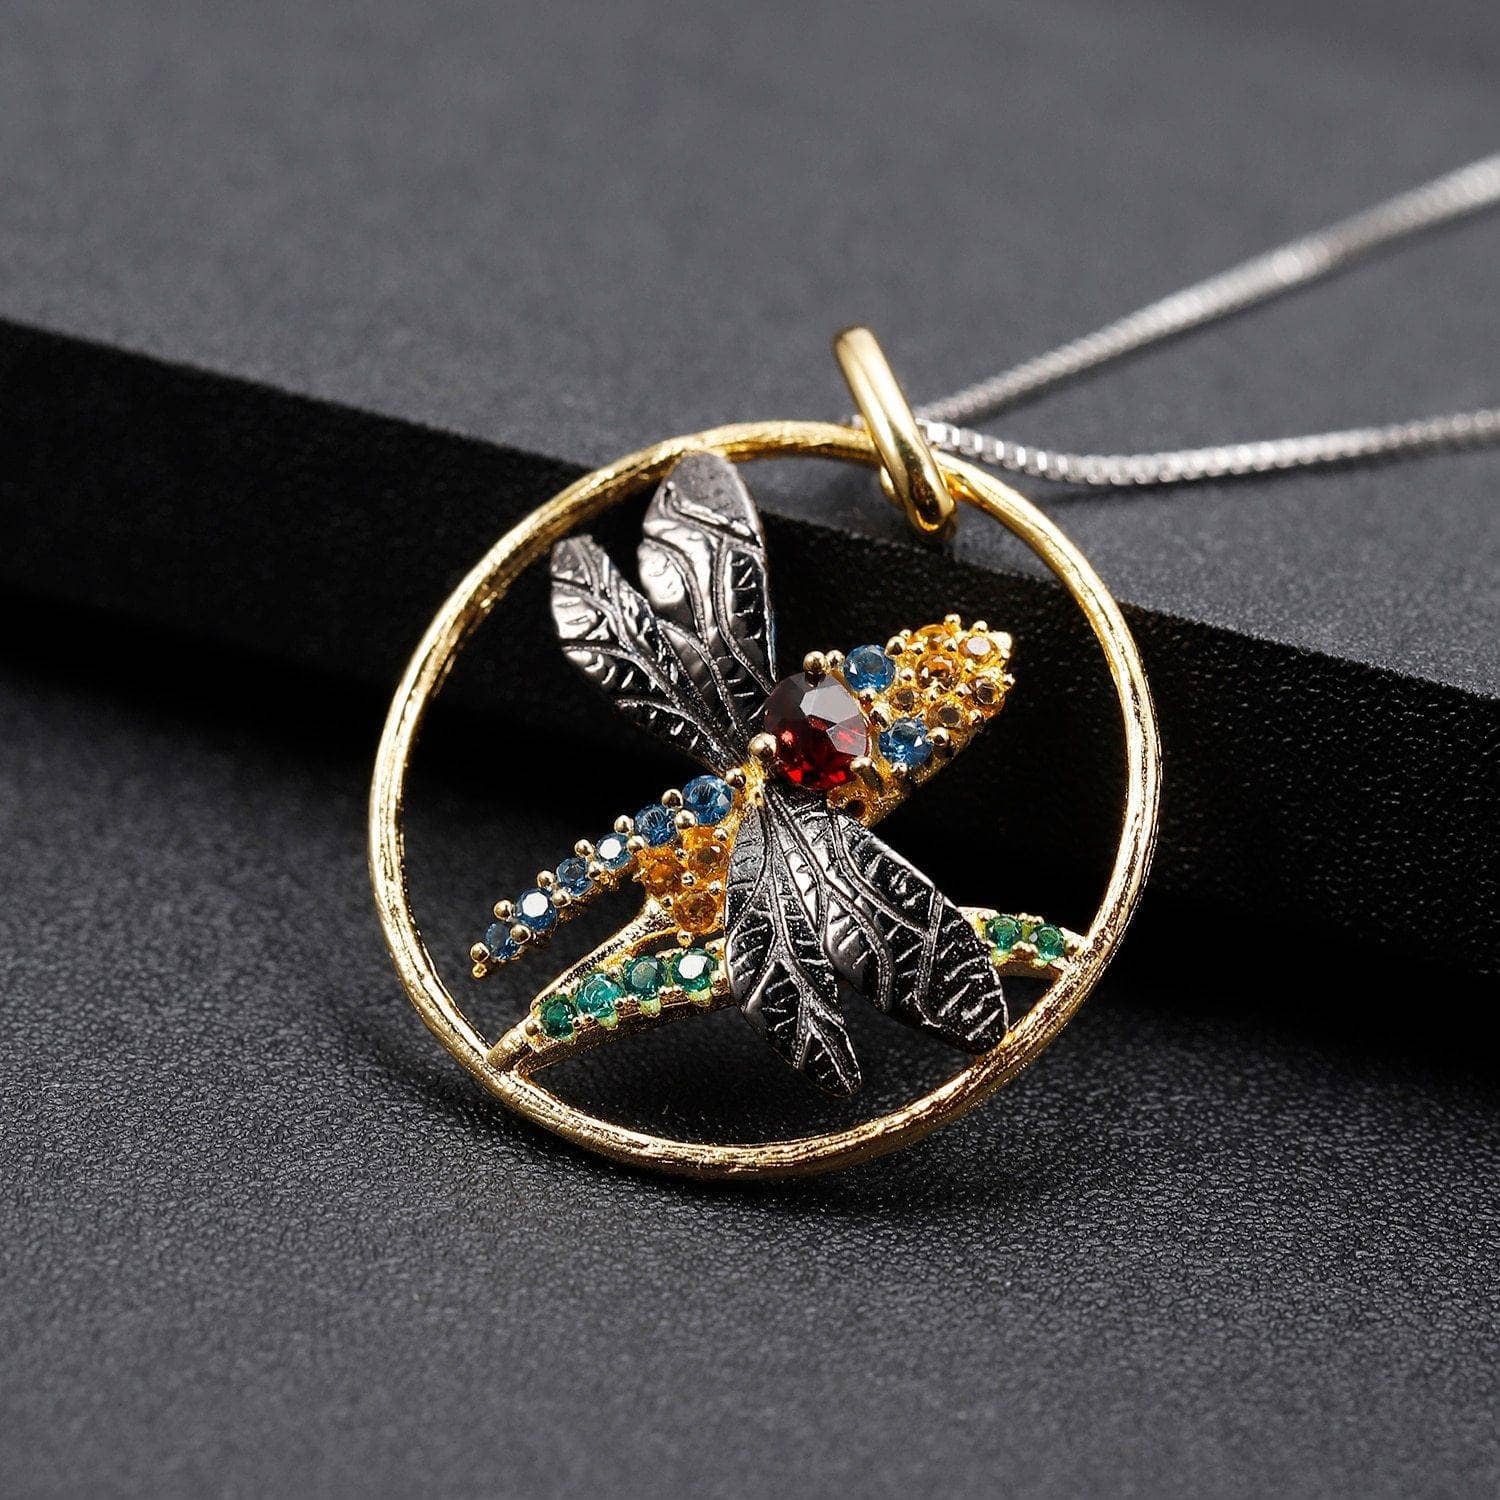 Natural Black Garnet Dragonfly Necklace Pendant - Black Diamonds New York